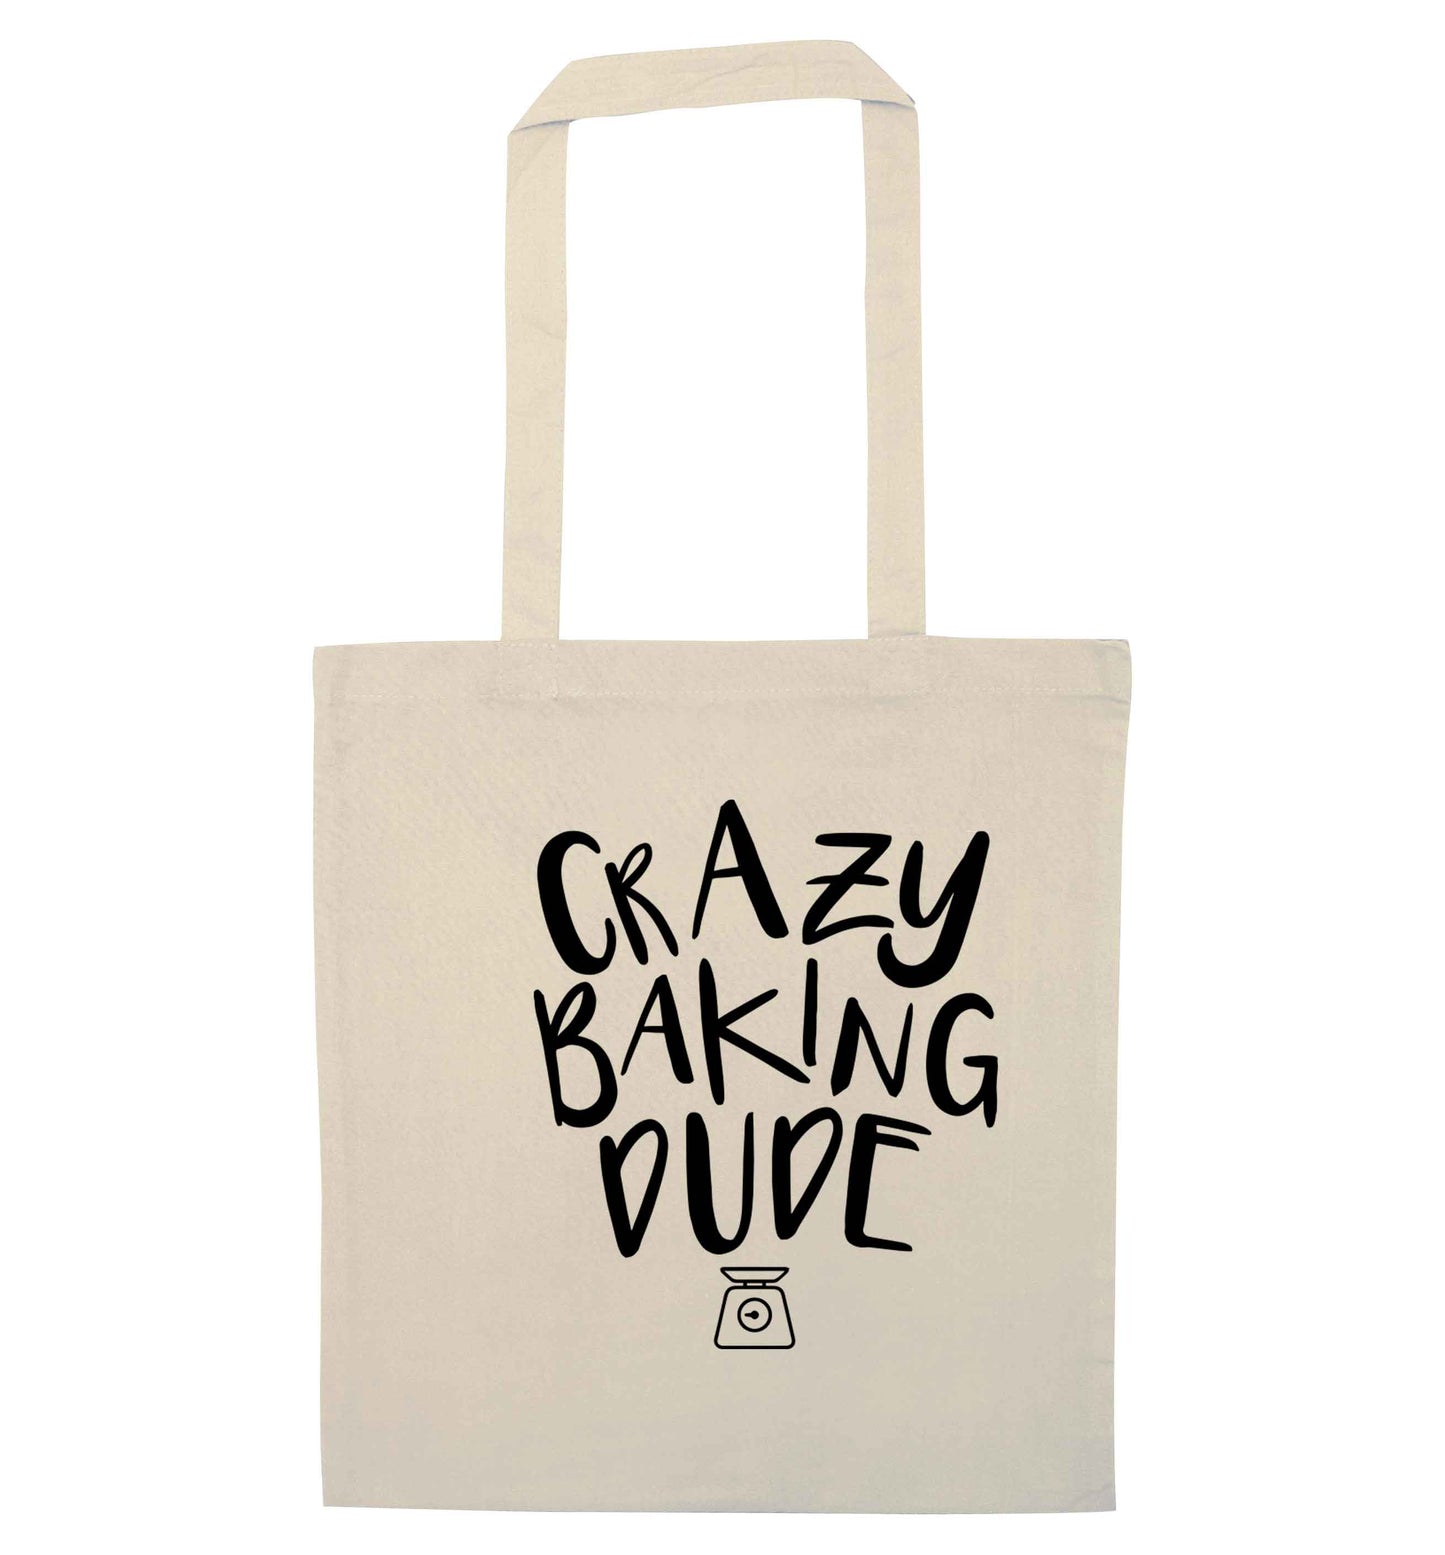 Crazy baking dude natural tote bag